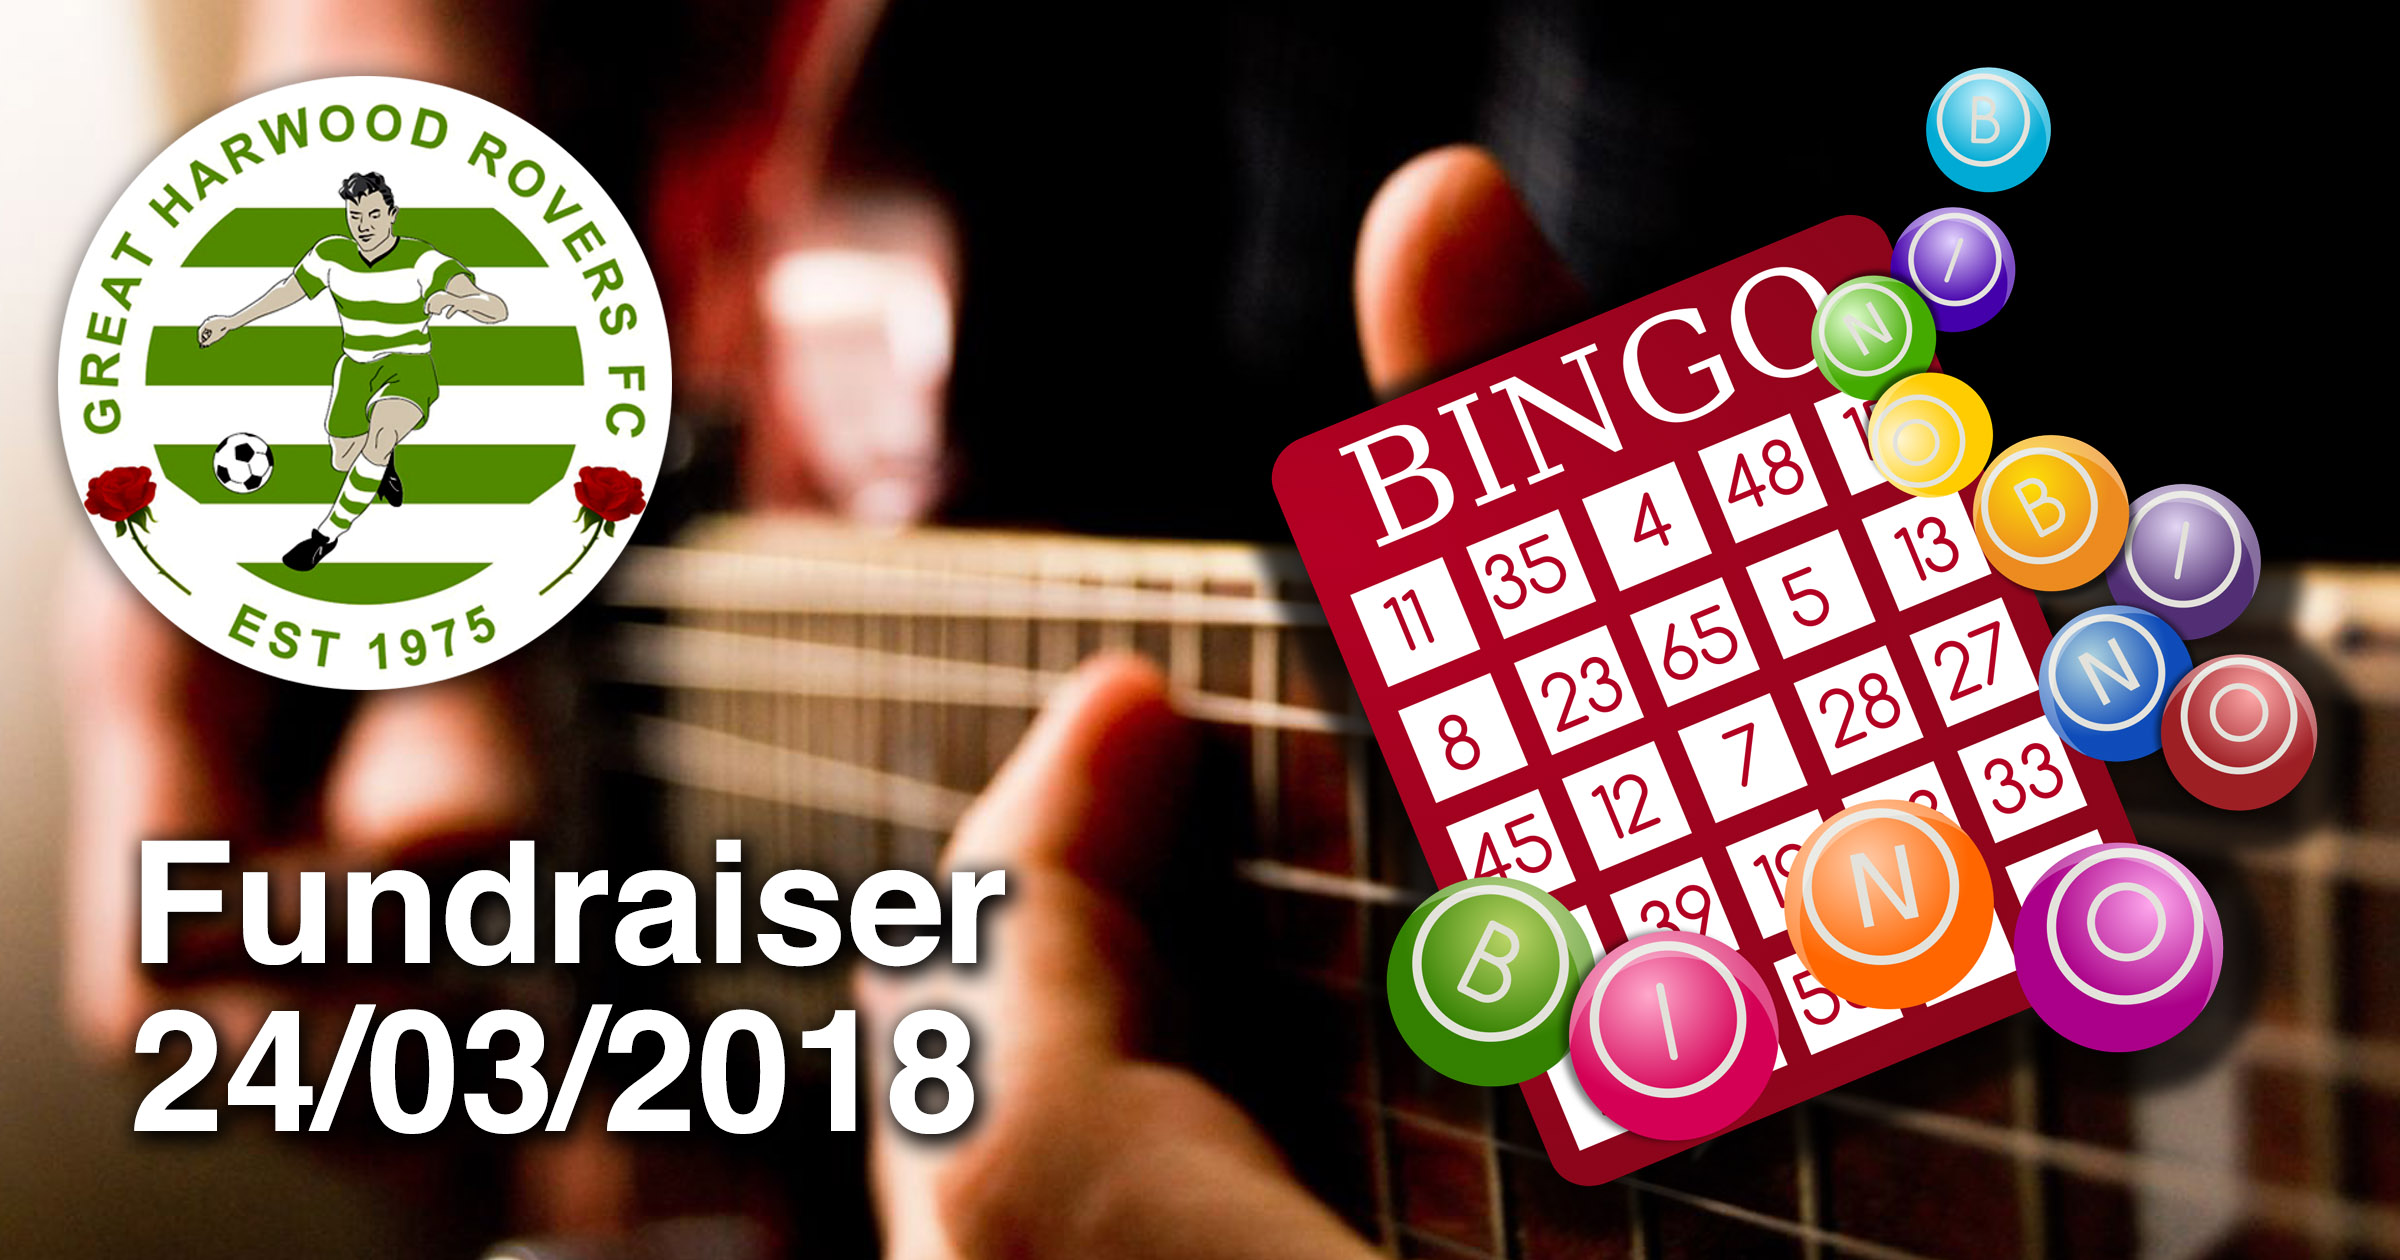 GHRFC Bingo & Live Music Fundraising Evening – 24/03/2018